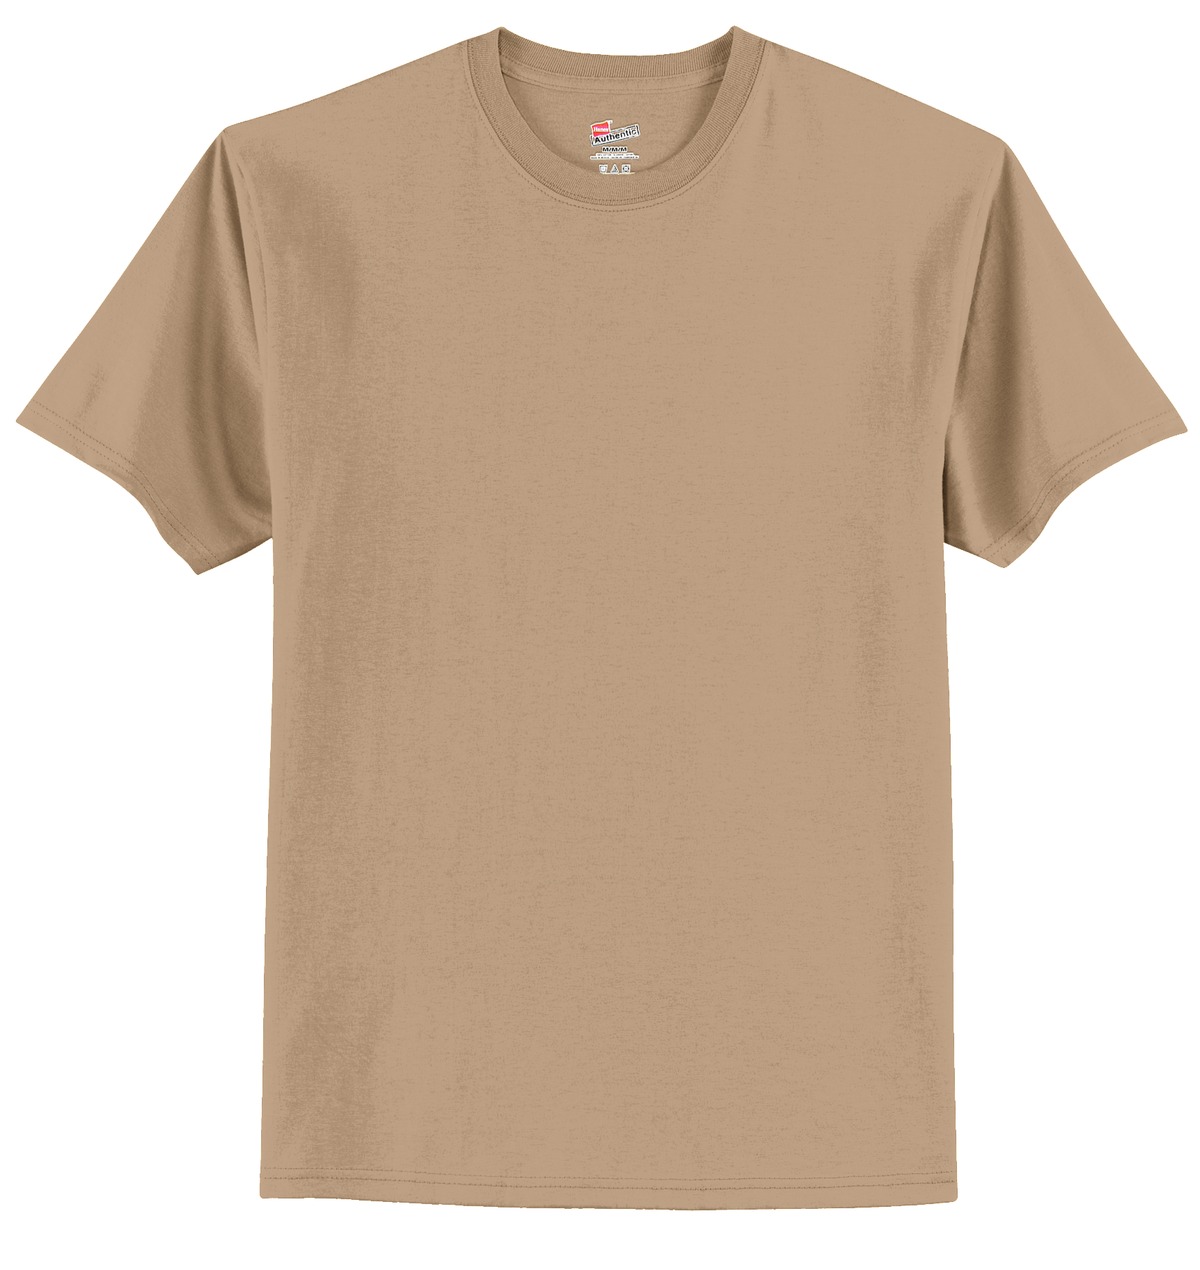 Hanes – ComfortSoft 100% Cotton T-Shirt. 5280 – Dynasty Custom